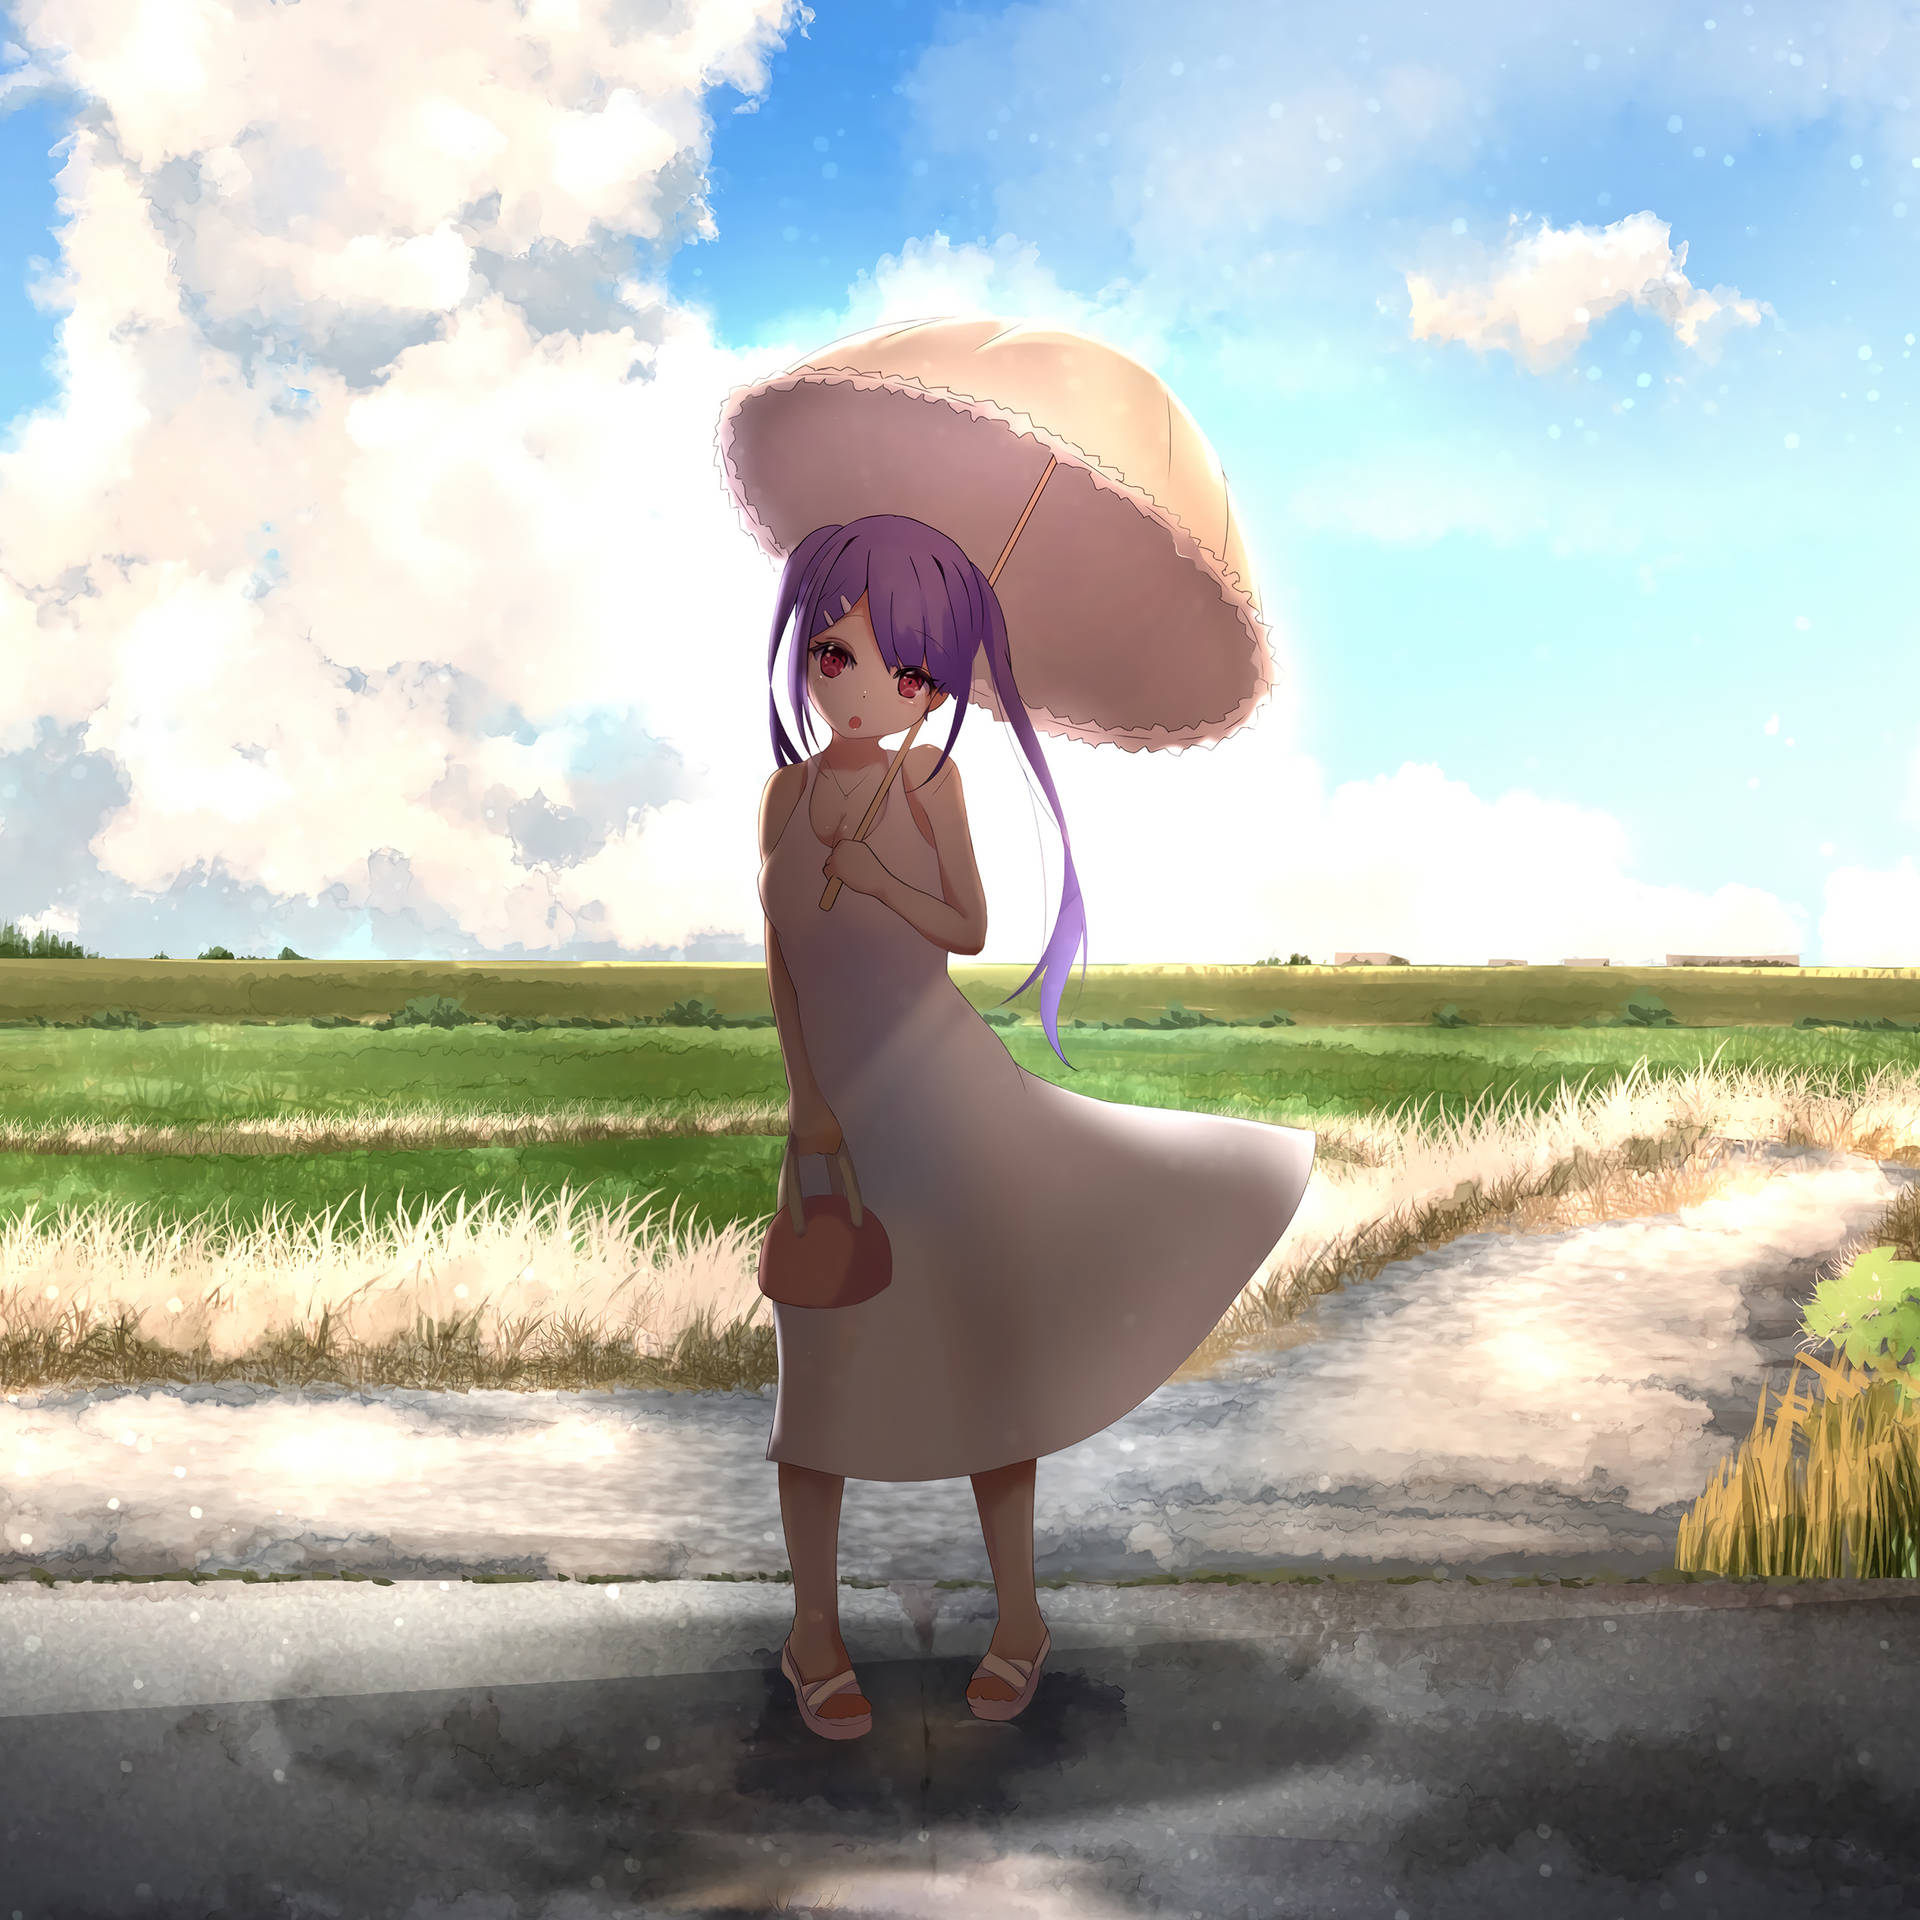 Chicade Anime En Vestido De Verano Para Ipad. Fondo de pantalla